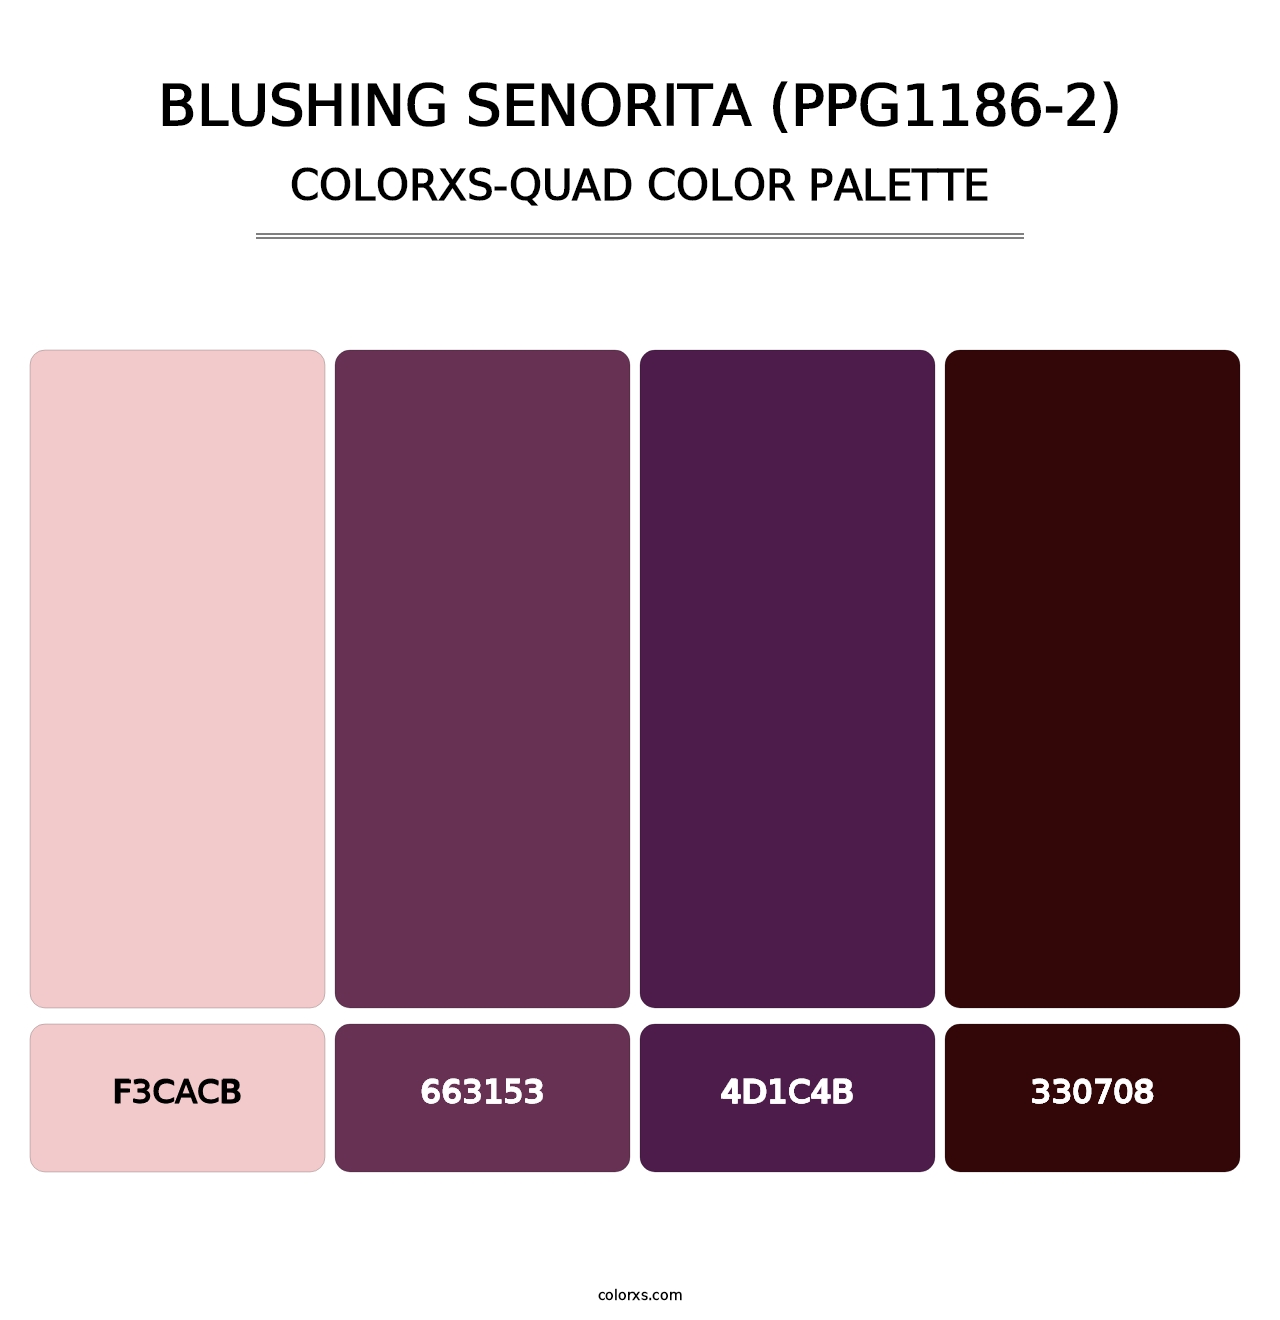 Blushing Senorita (PPG1186-2) - Colorxs Quad Palette